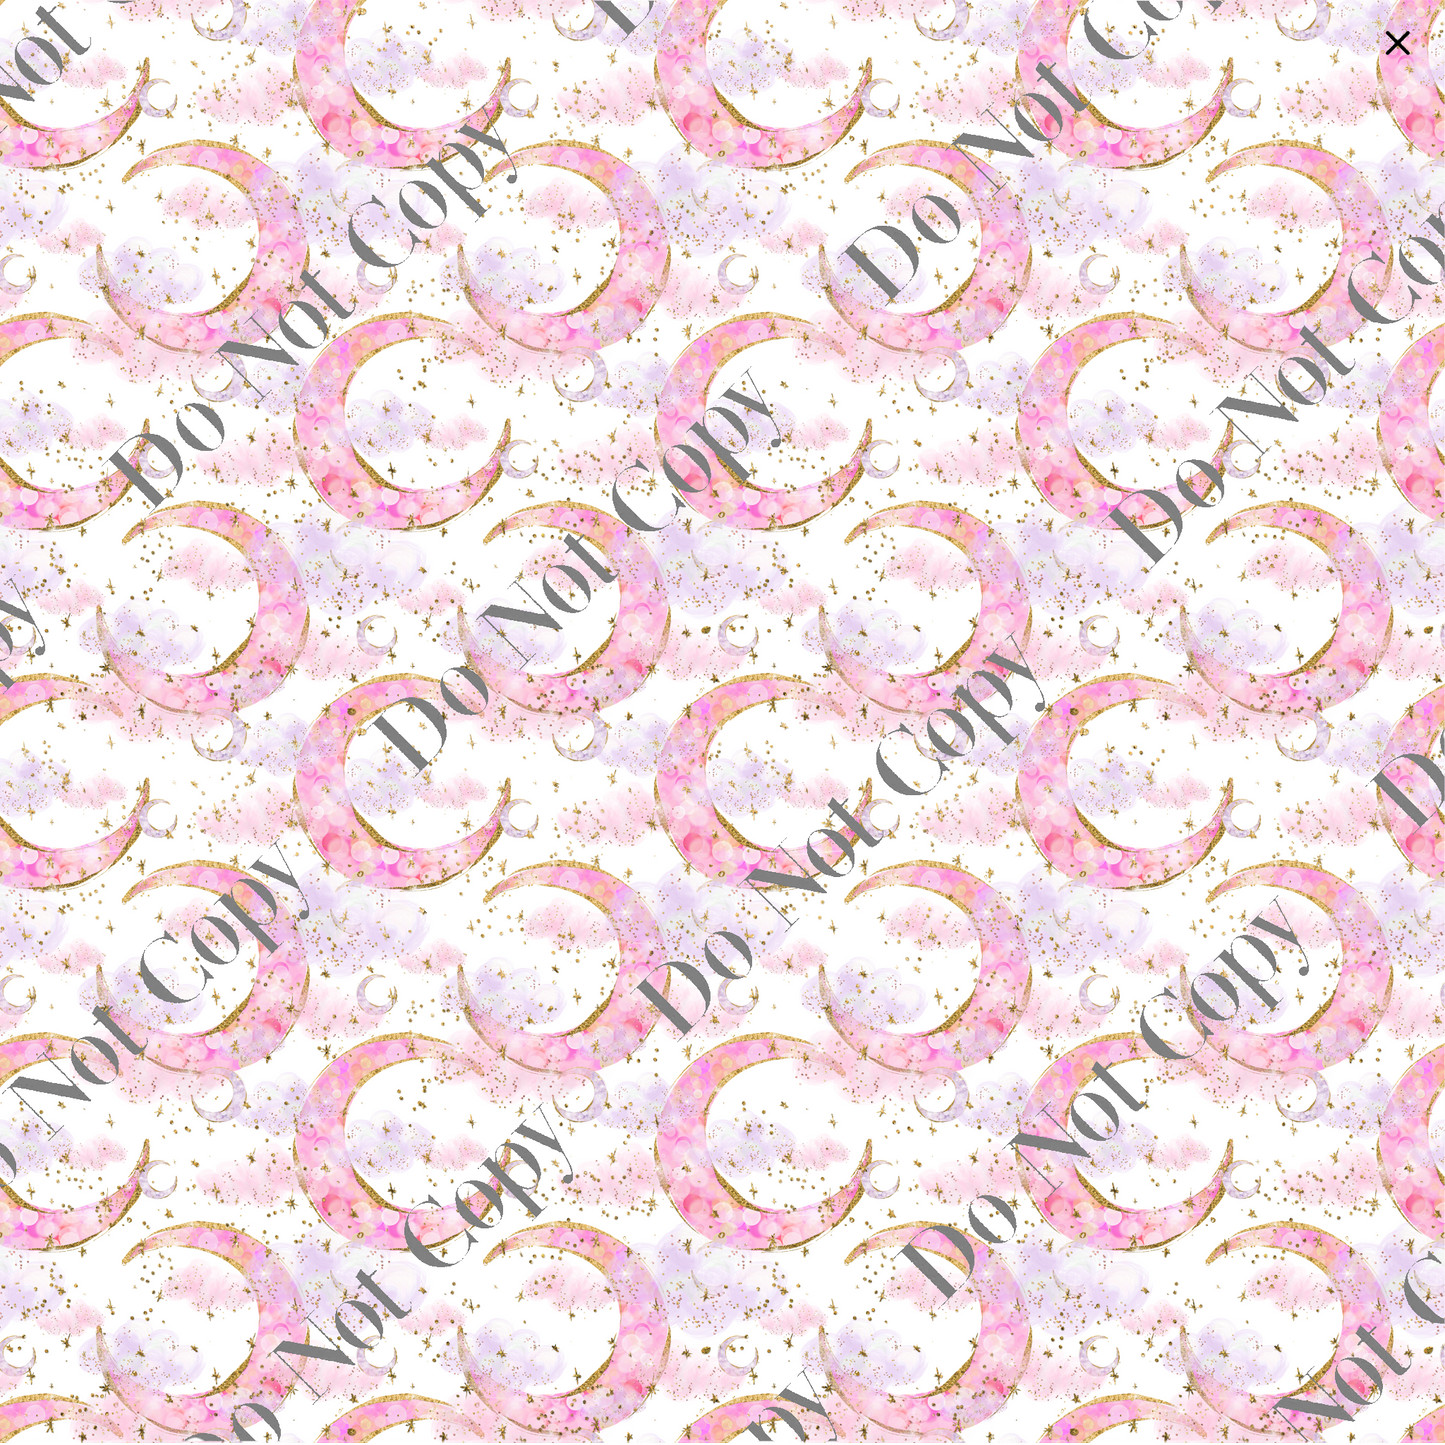 Patterned Vinyl - Pink Crescent Moon